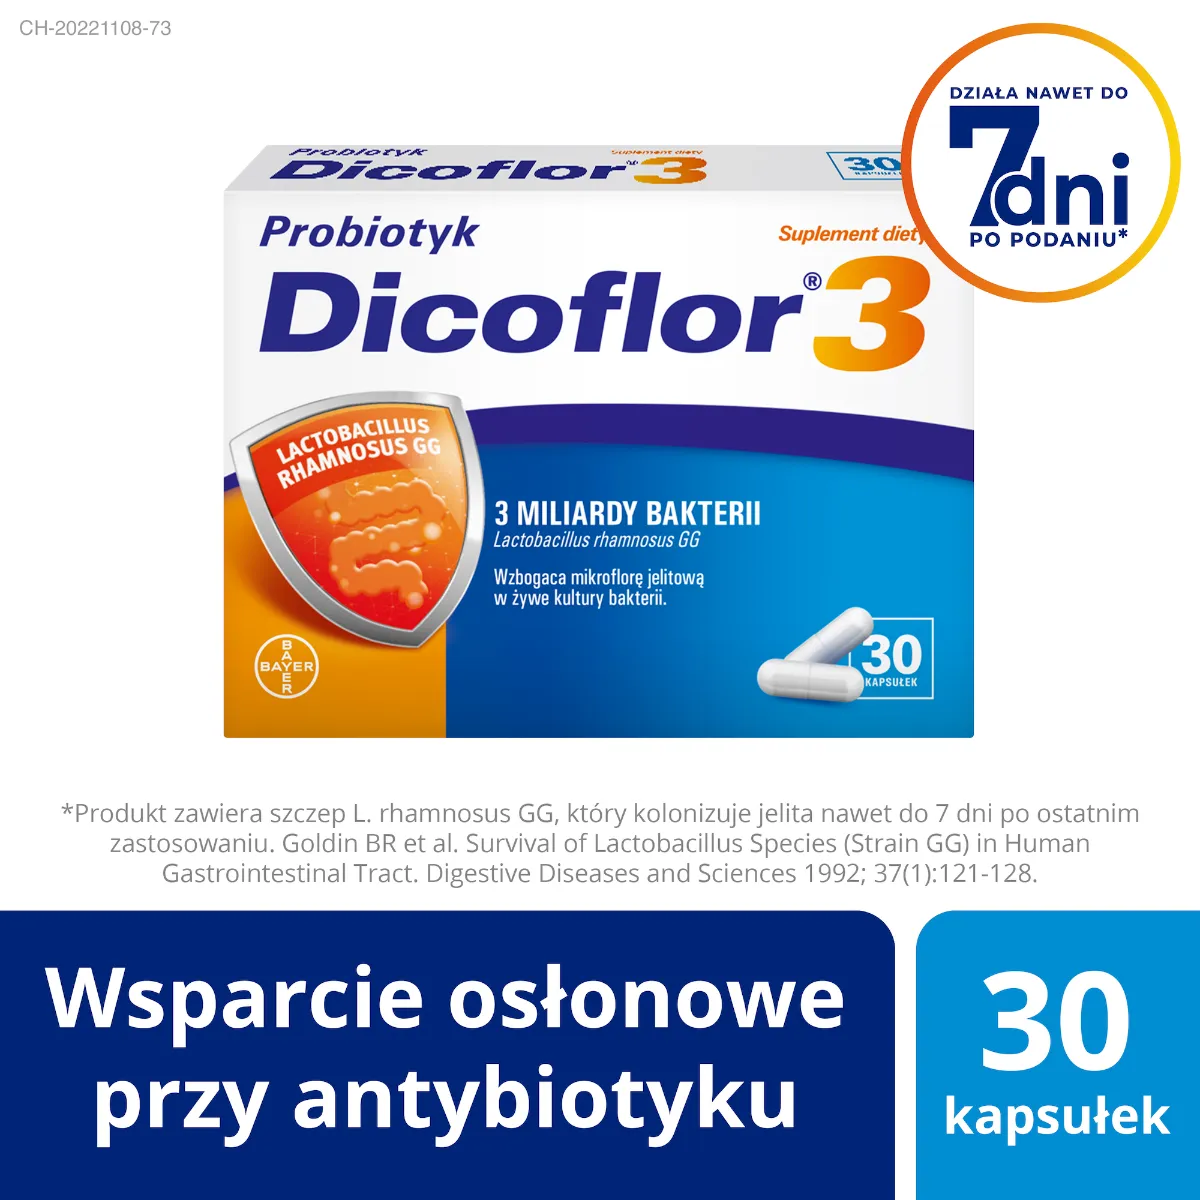 Dicoflor 3, suplement diety, 30 kapsułek